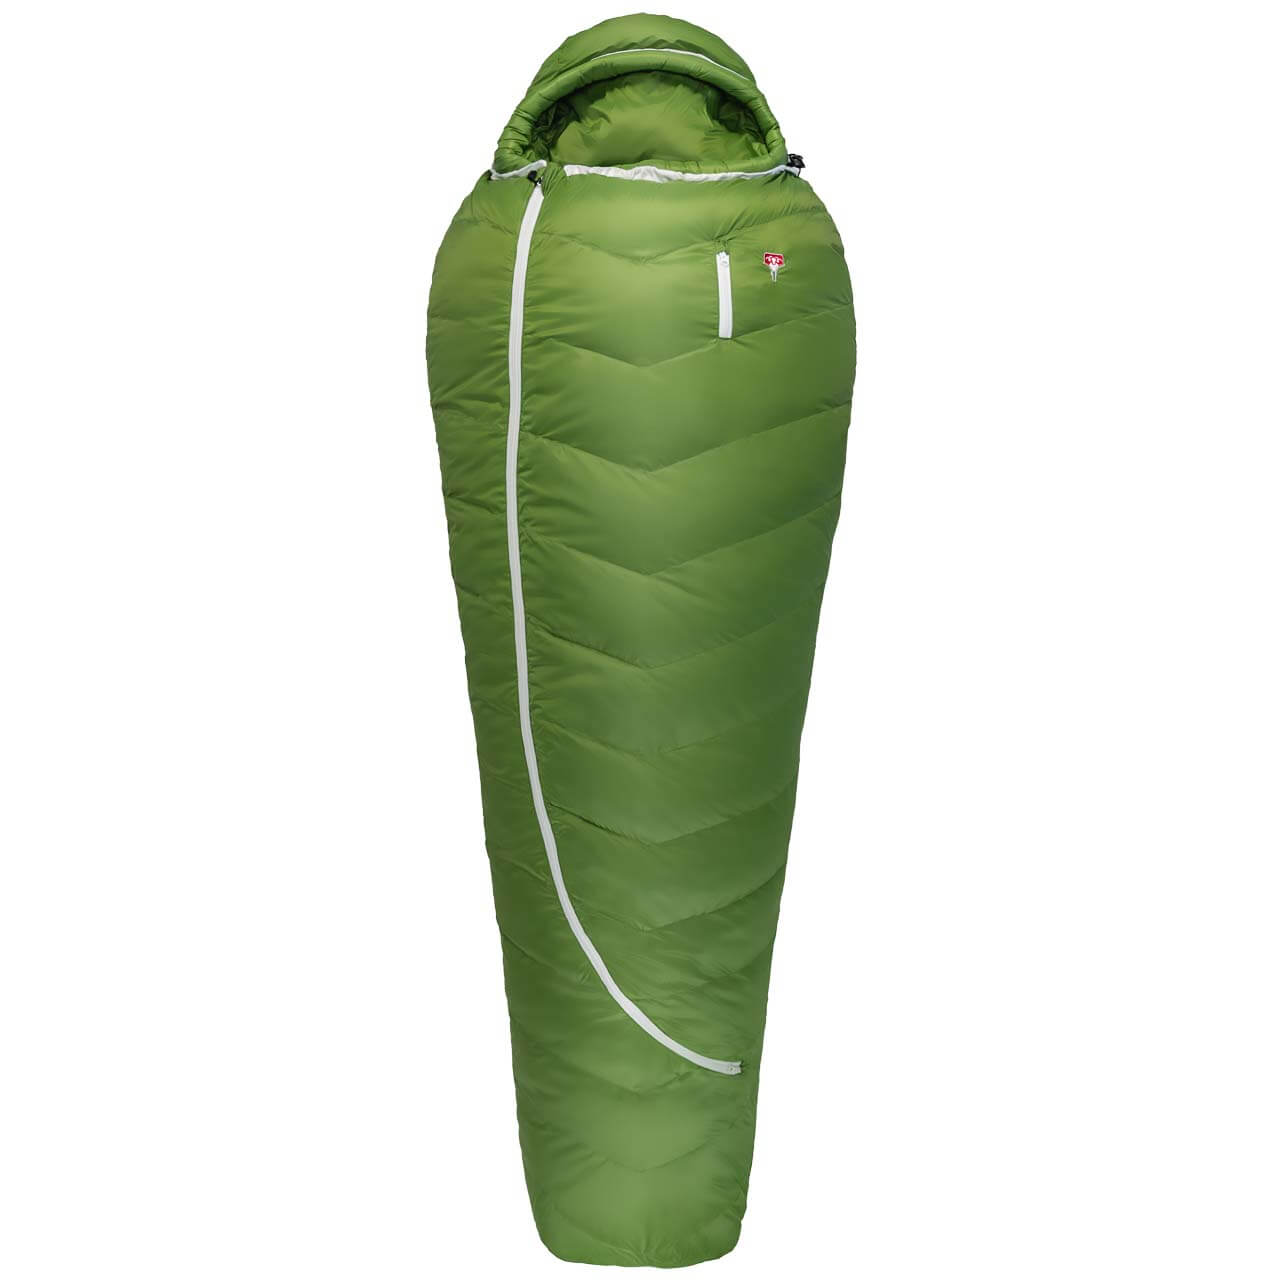 Grüezi Bag Biopod DownWool Summer - Cactus, 175 cm von Grüezi Bag}